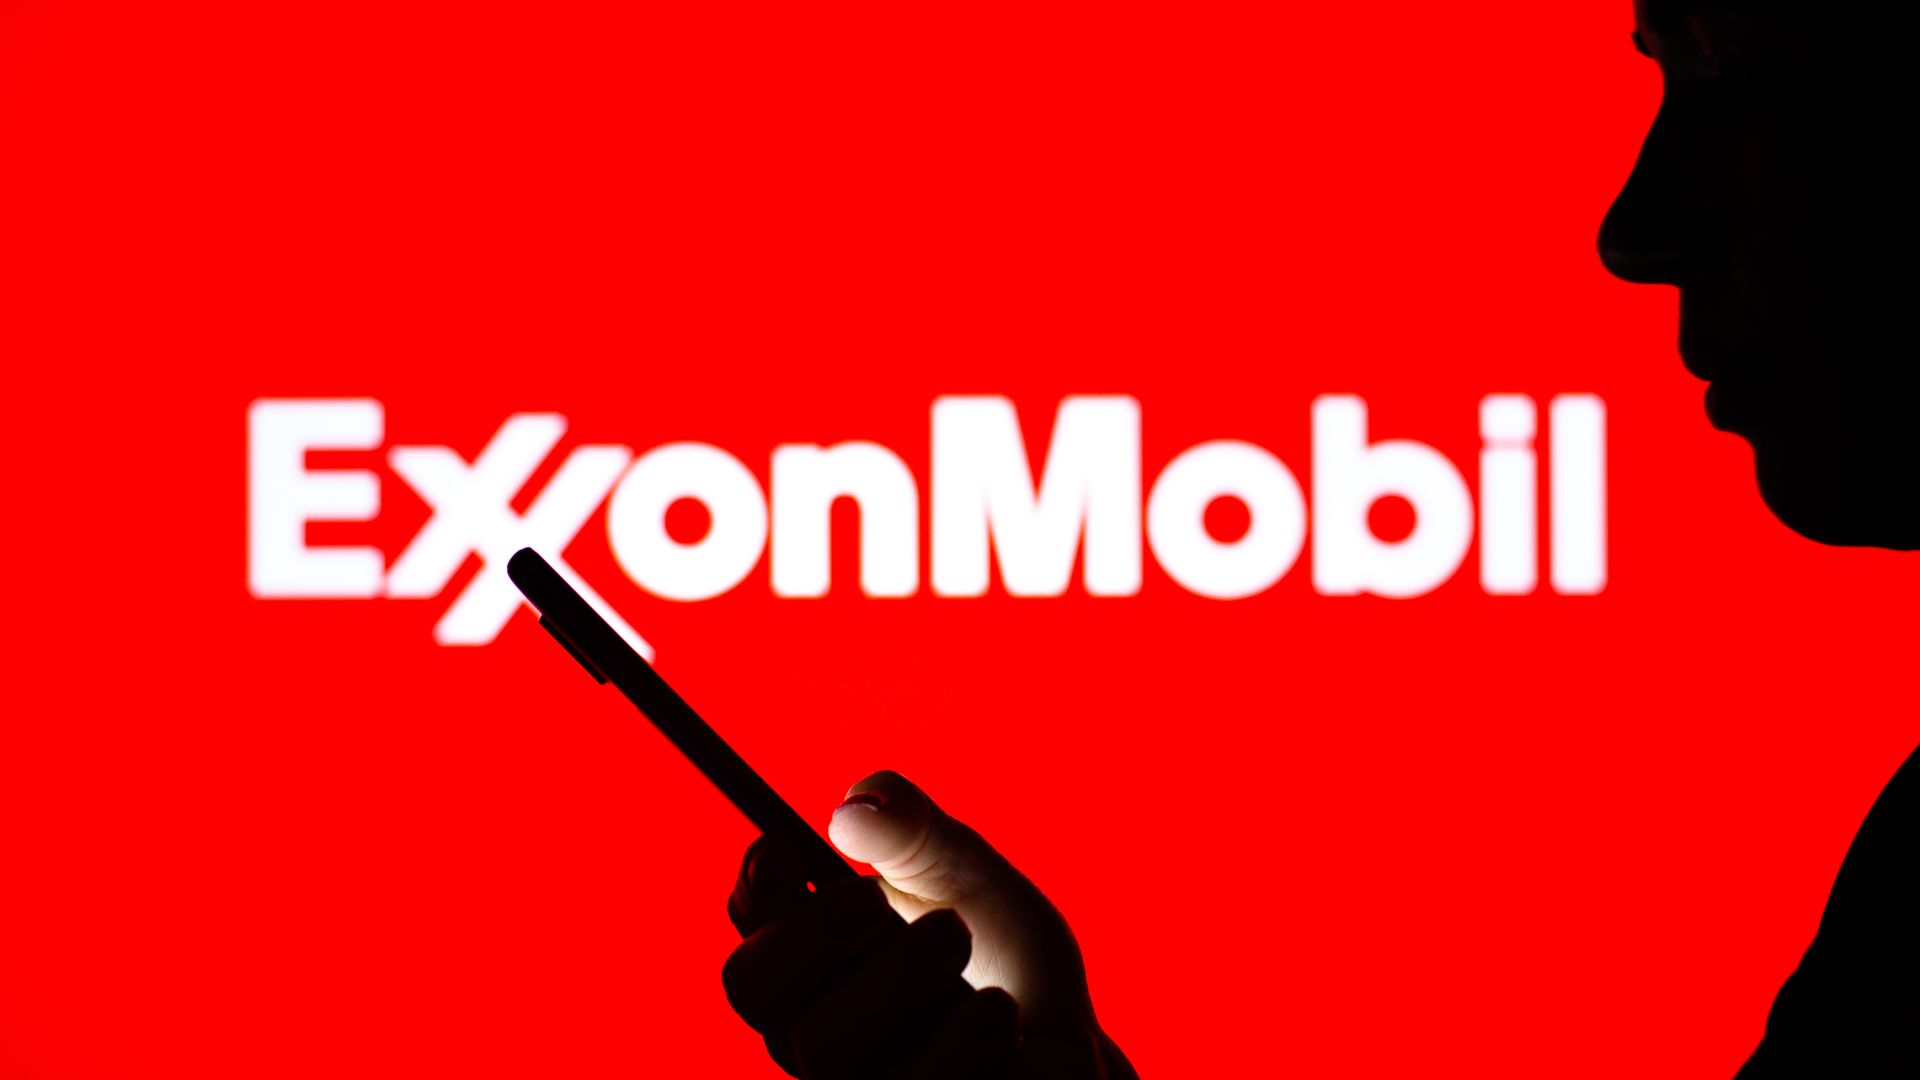 Image of the Exxon logo